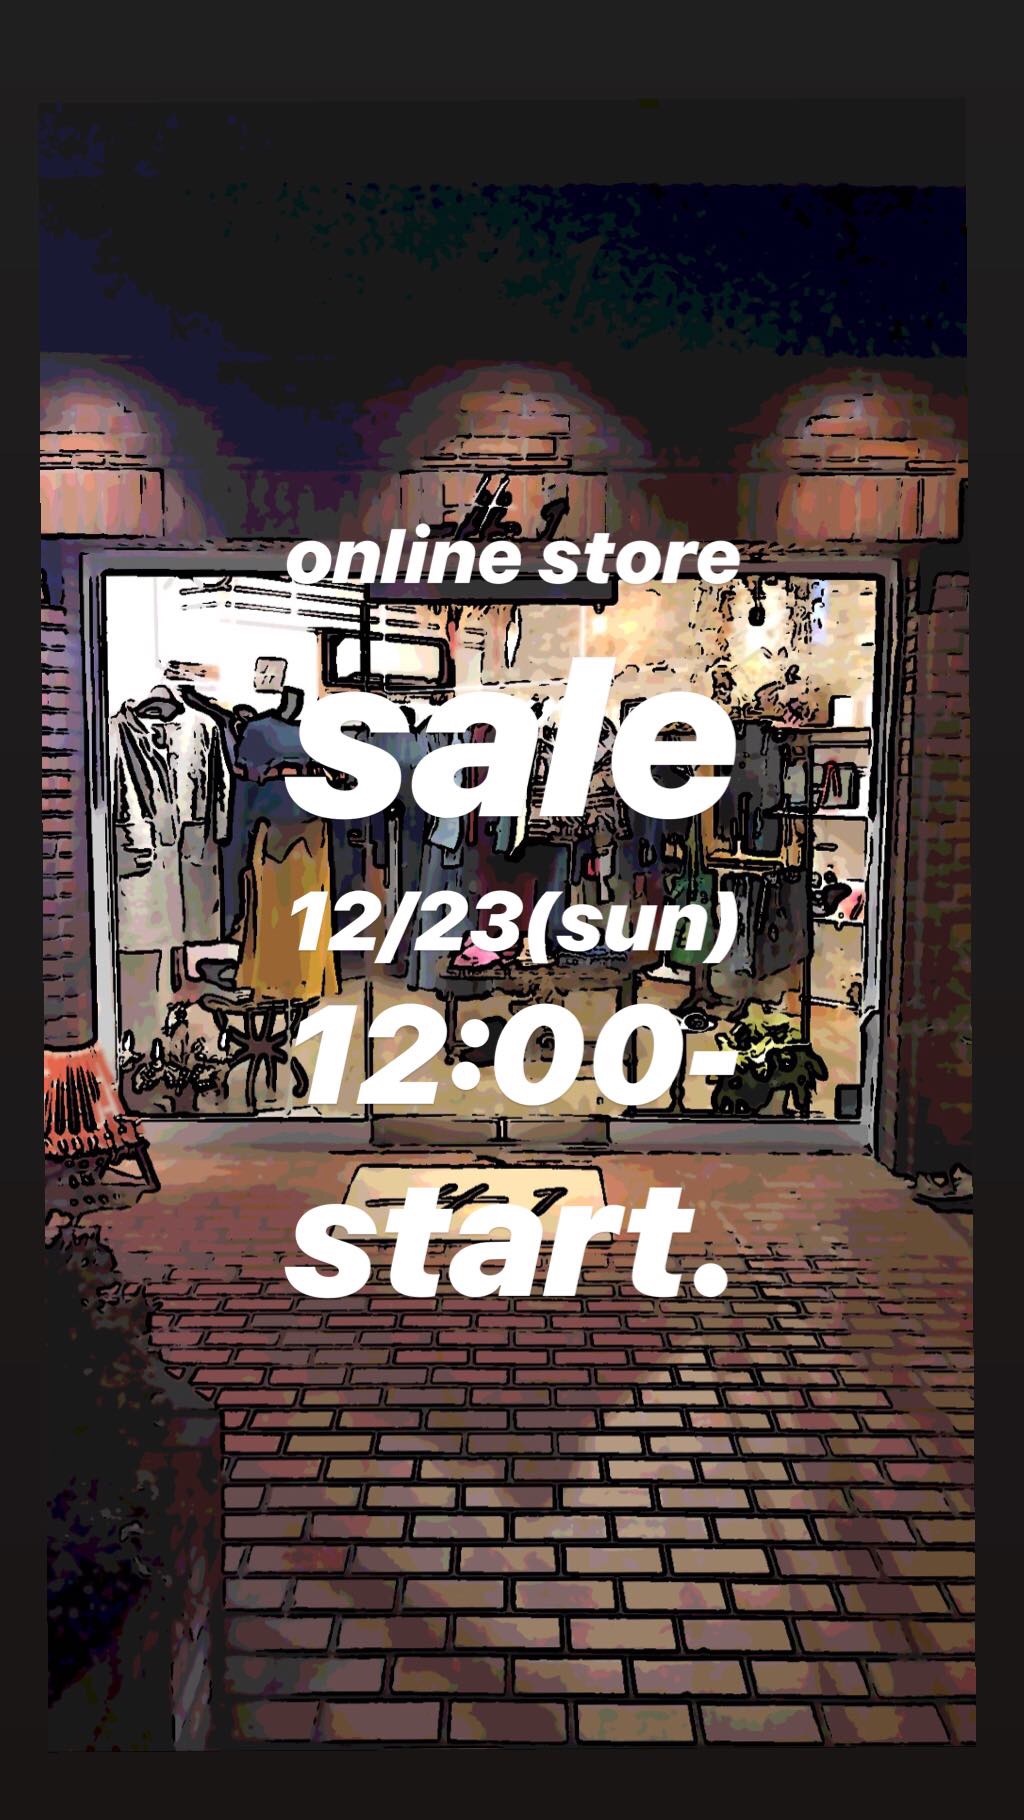 online store sale